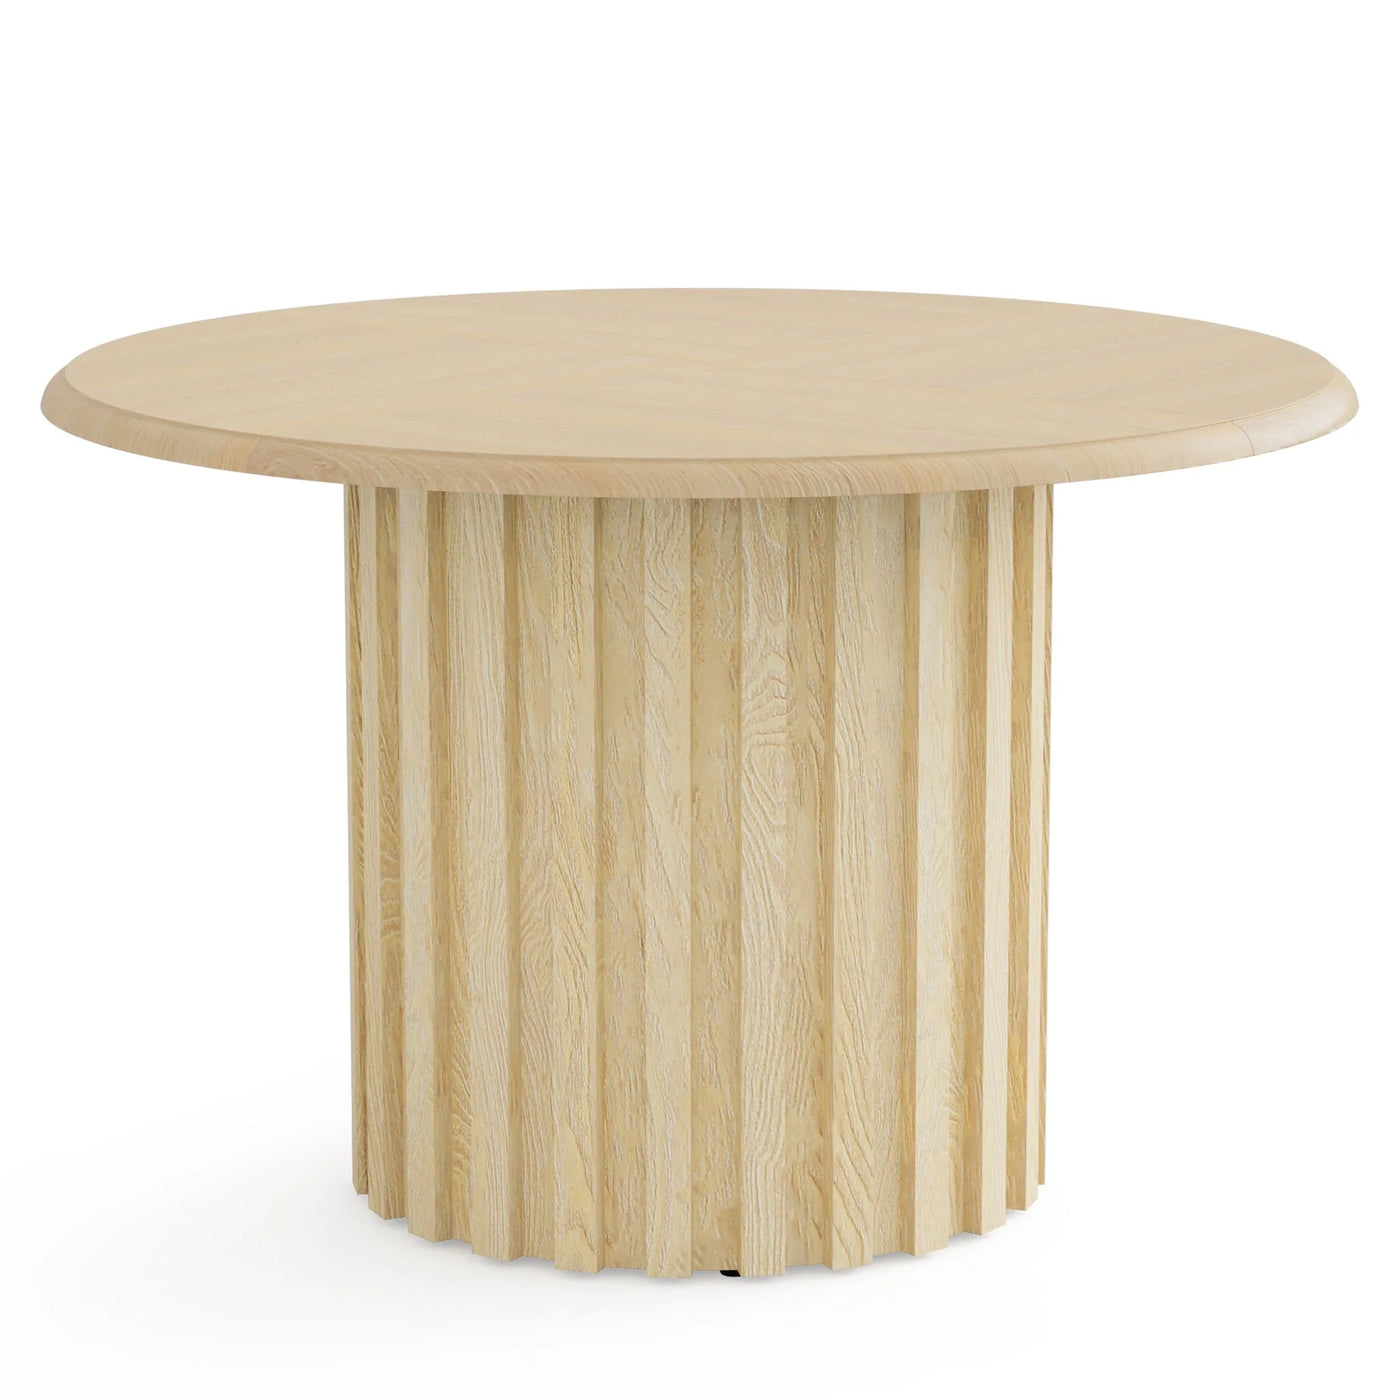 Mesa de comedor redonda Trebon | Mesa de cocina de estilo rústico de madera de roble con base de metal para 4 personas